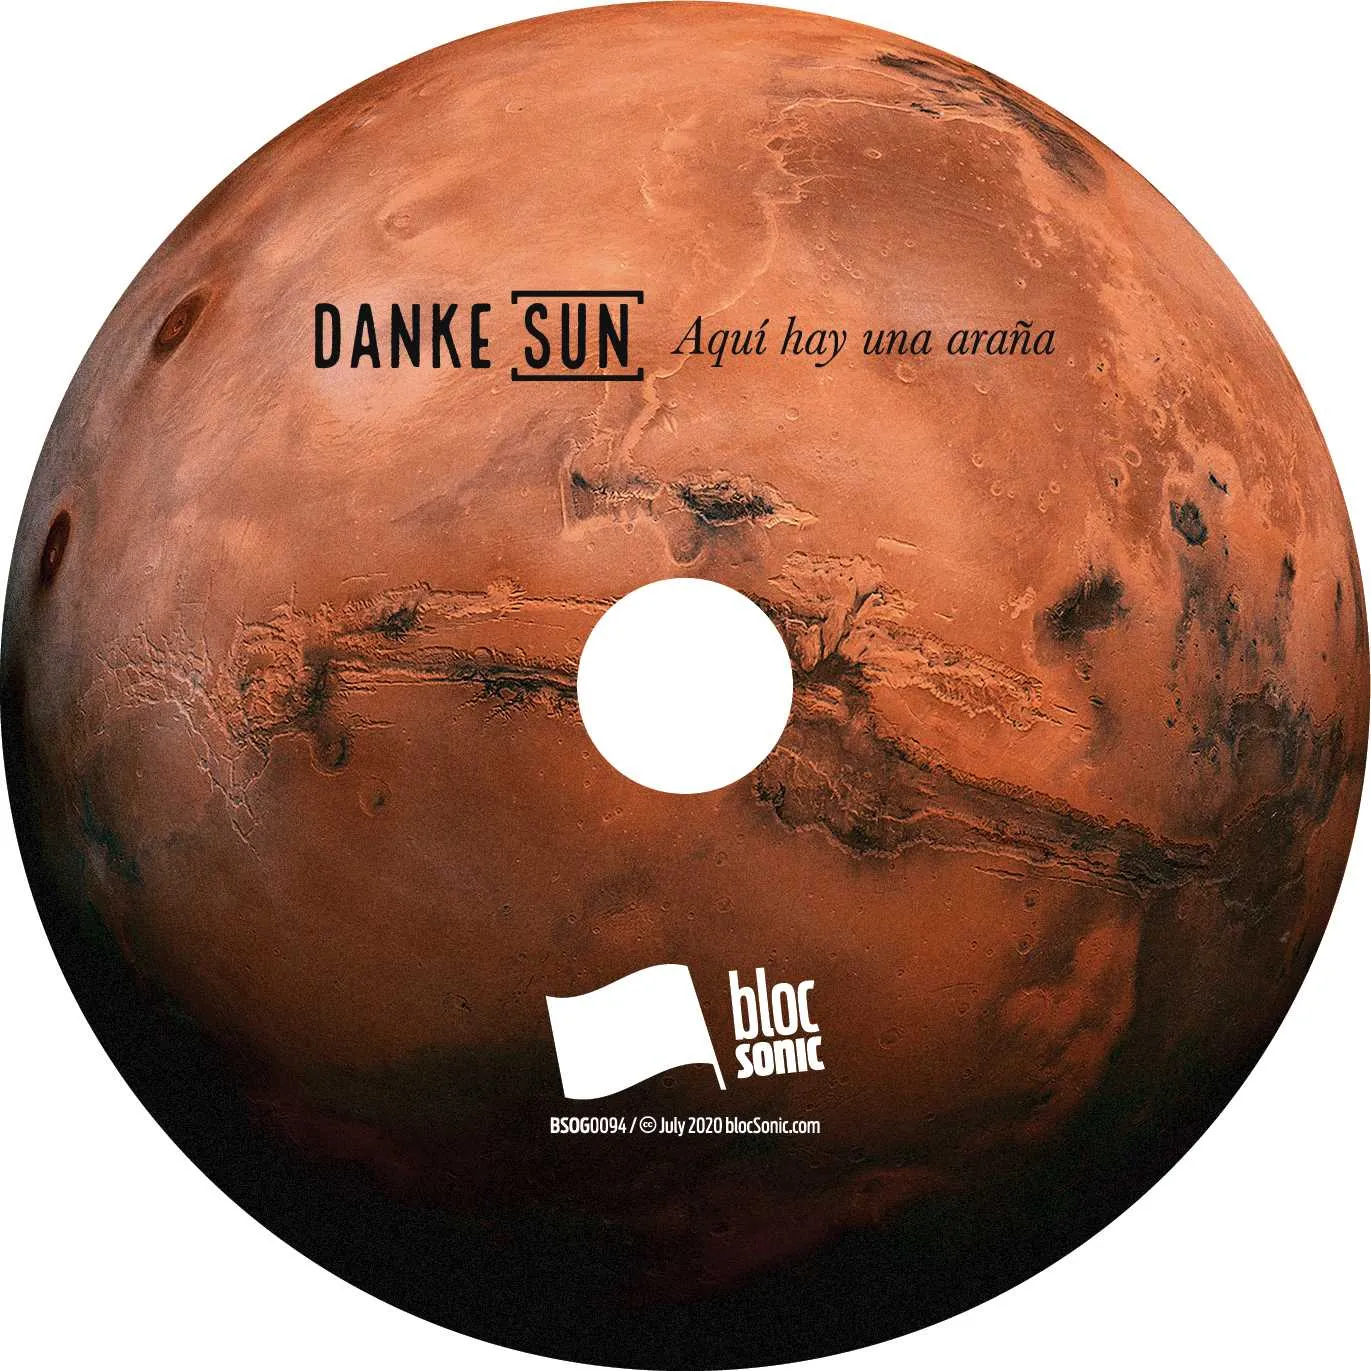 Album disc for “Aquí hay una araña” by Danke Sun